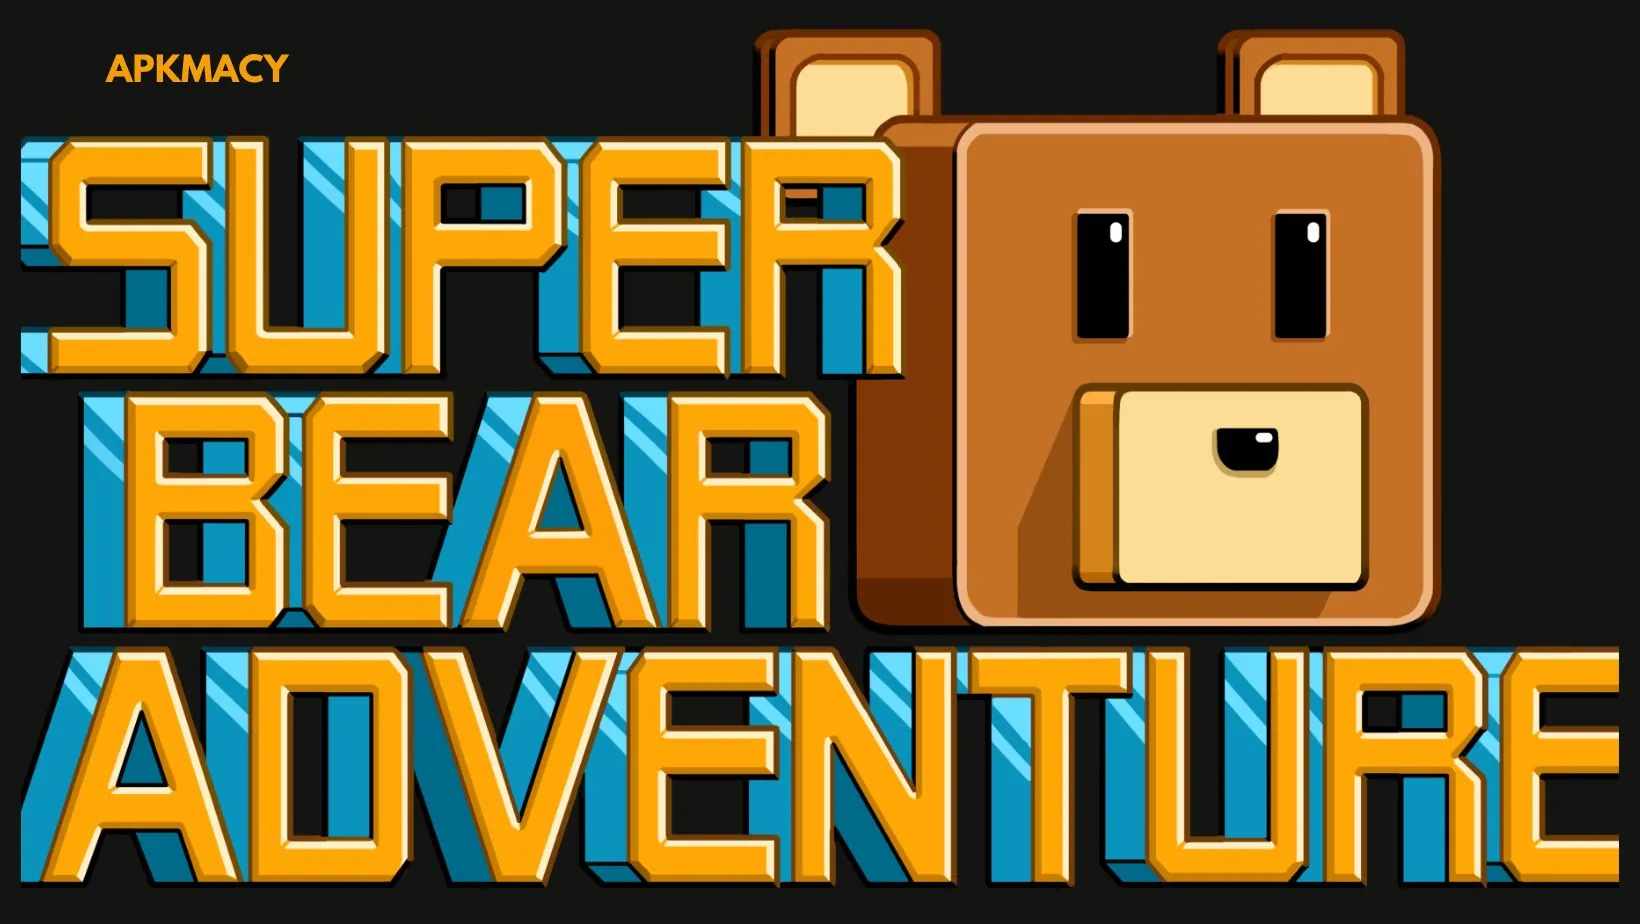 Descargar Super Bear Adventure 10.5 APK Gratis para Android